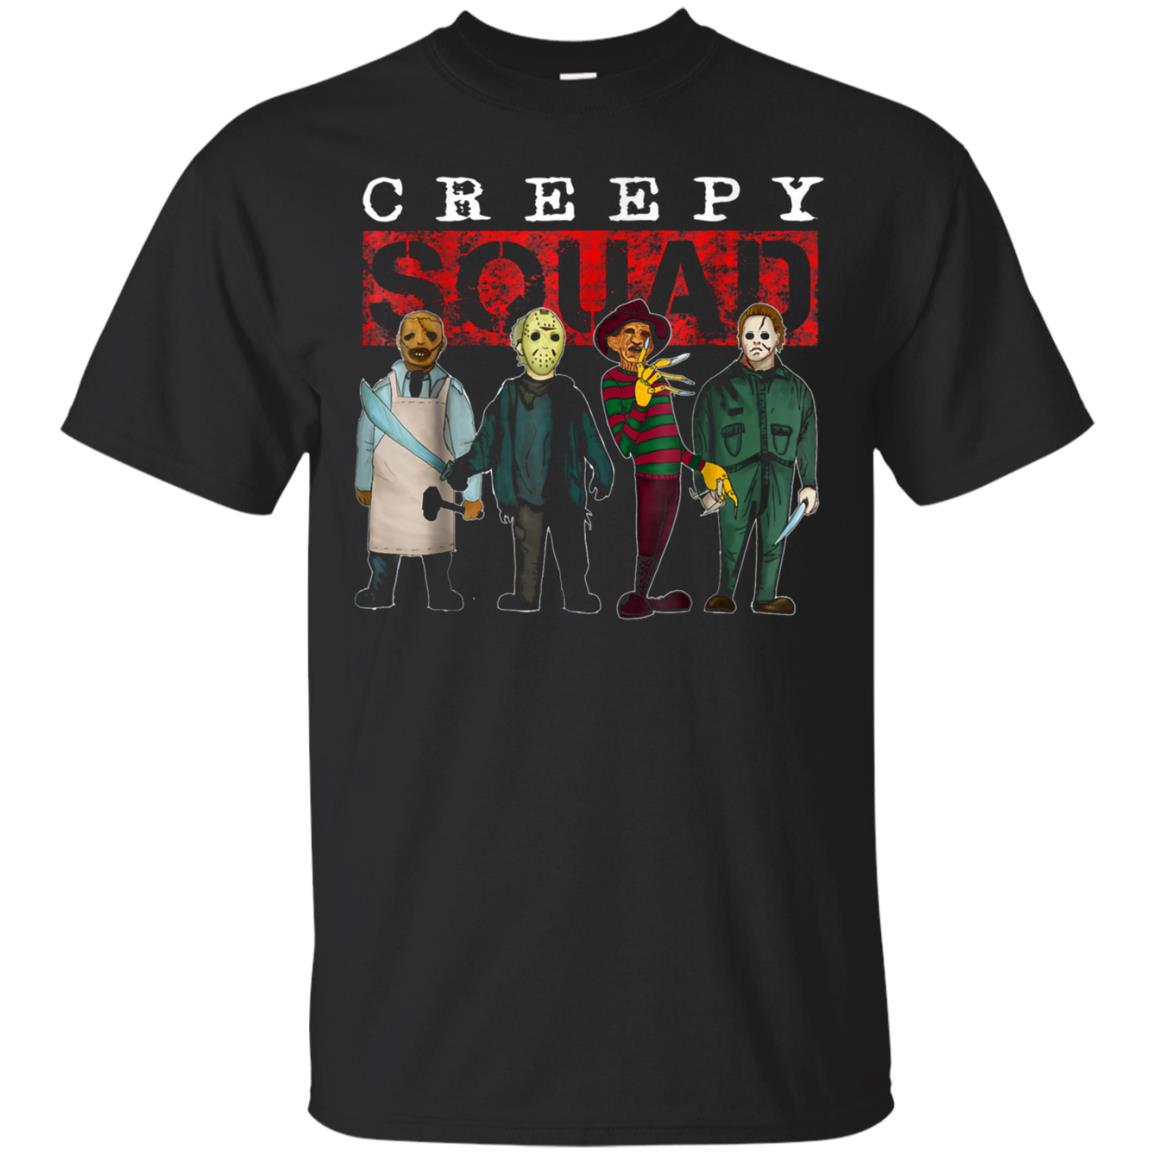 Creepy Squad T-shirt - Horror Halloween 2018 Costume Gift